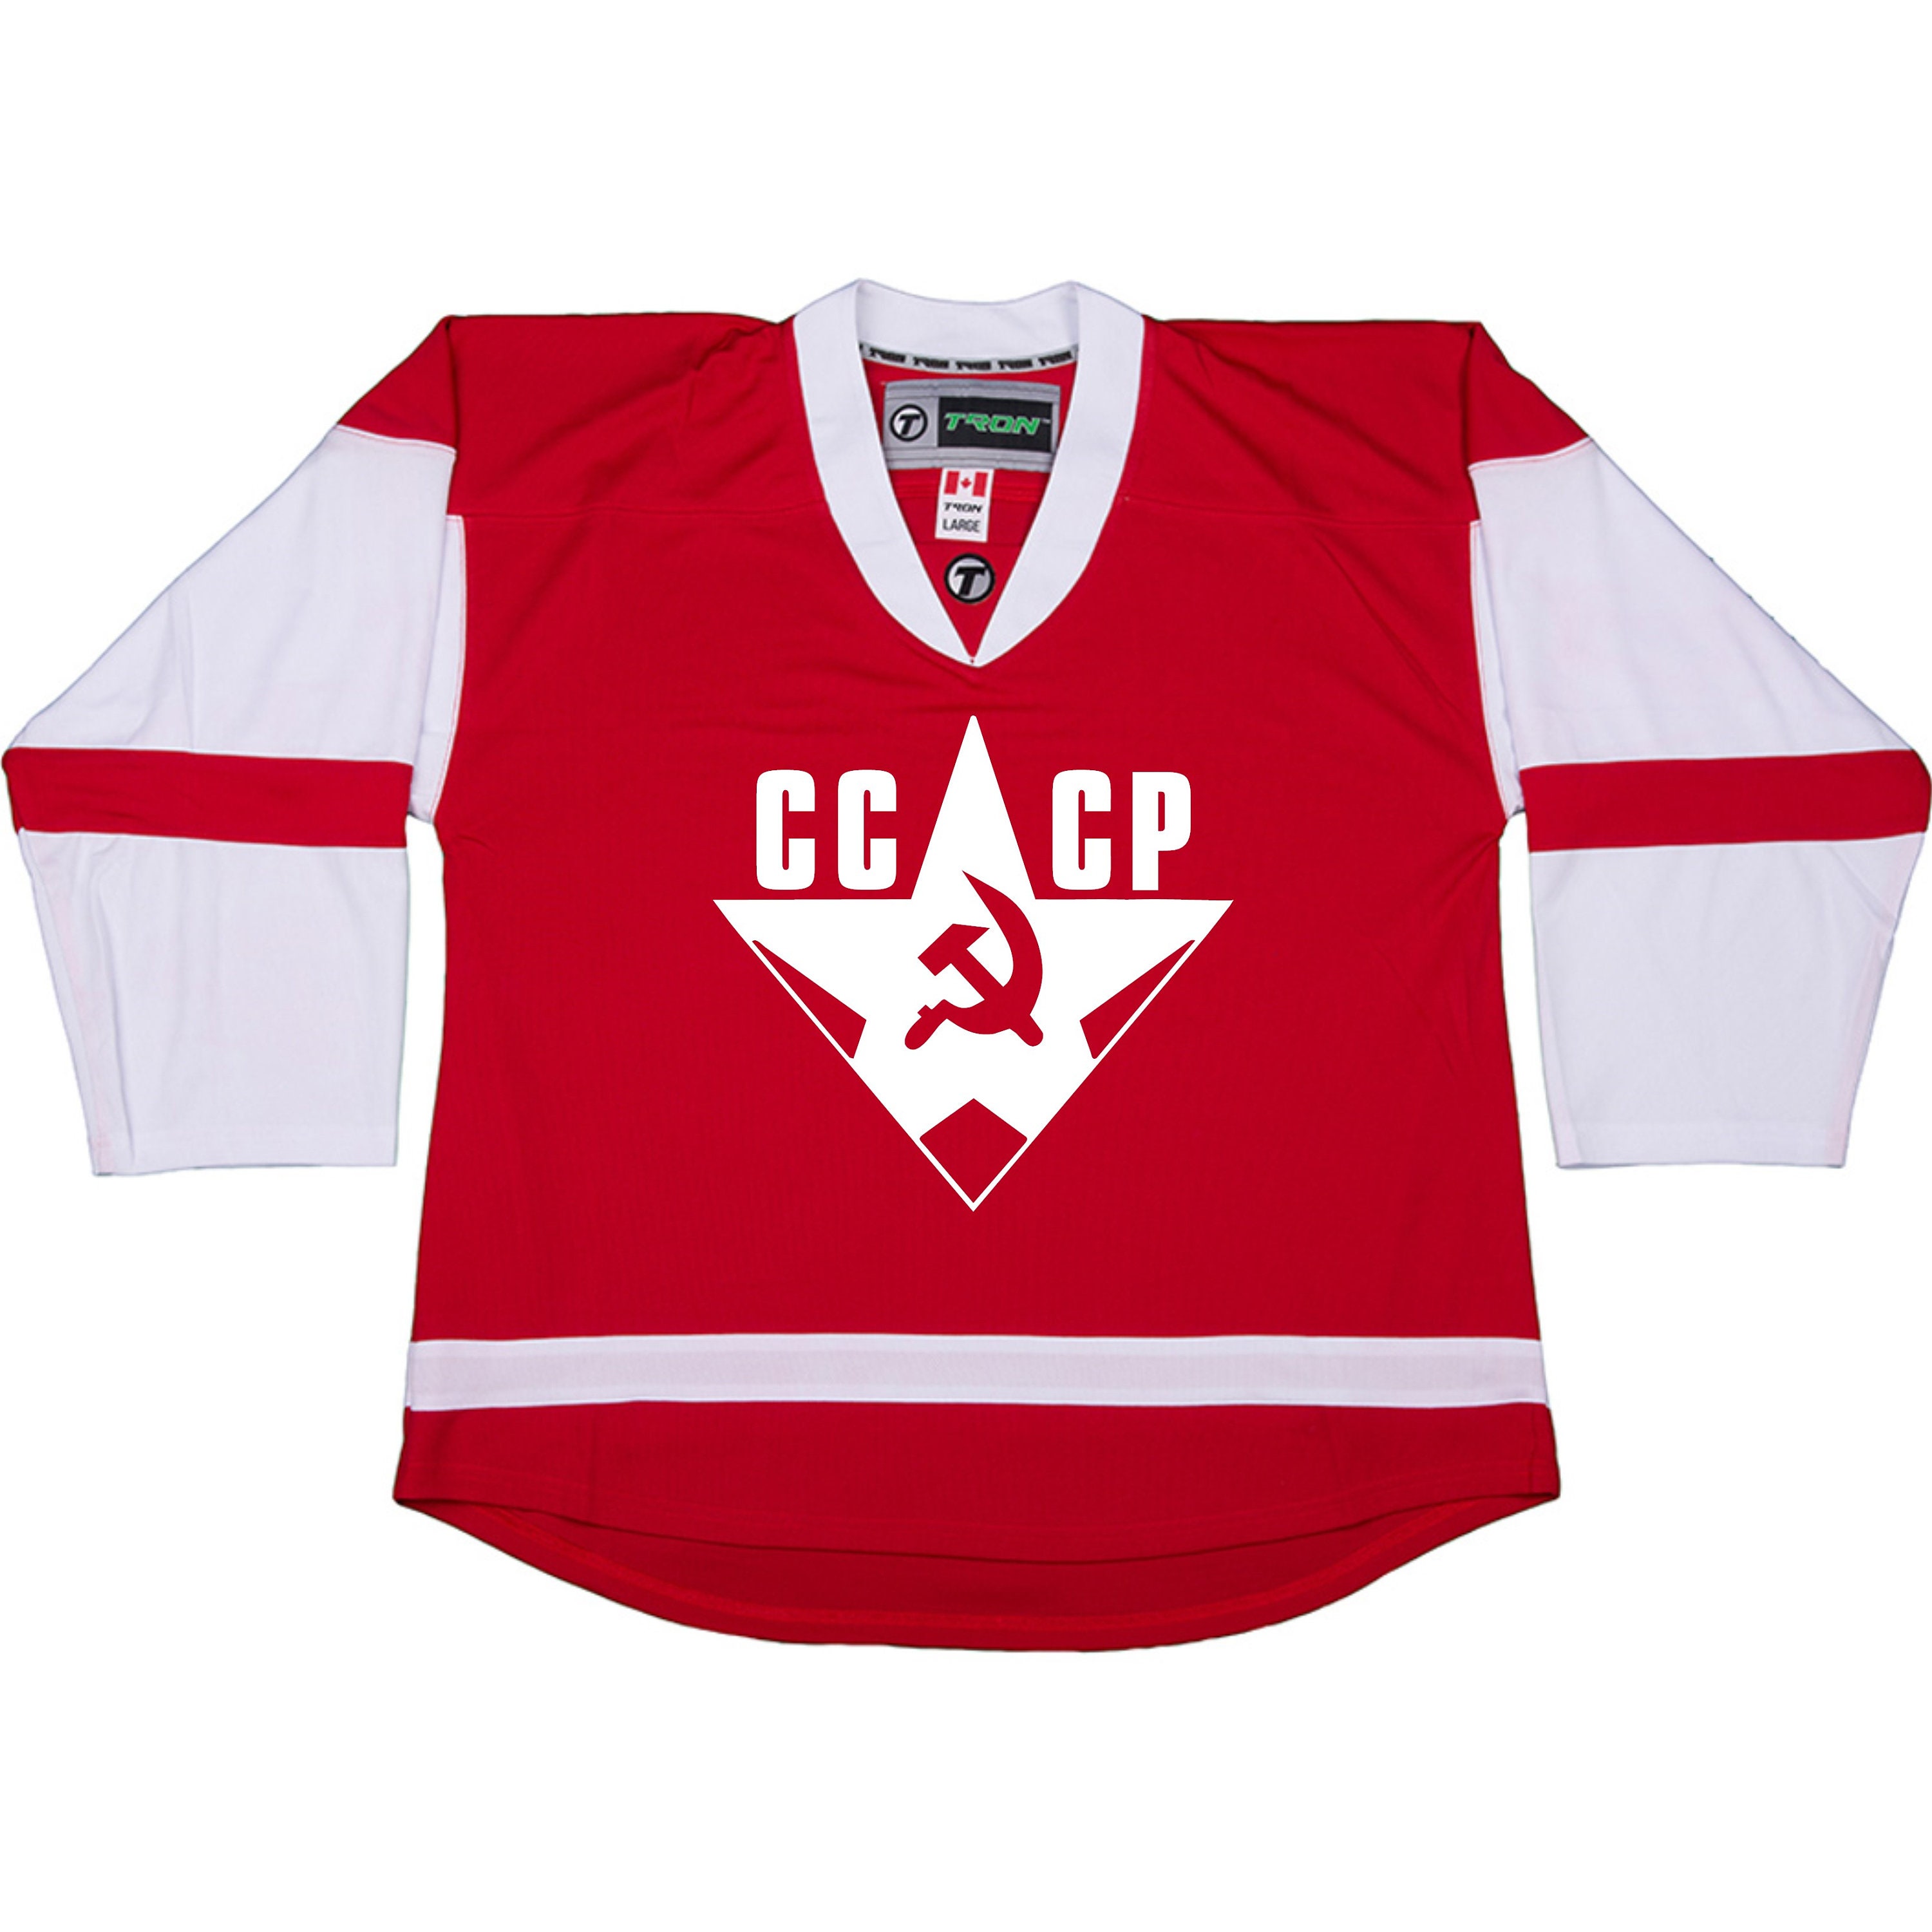 CKA KHL RUSSIA RUSSIAN ICE HOCKEY JERSEY LUTCH sz 42 ( SMALL )